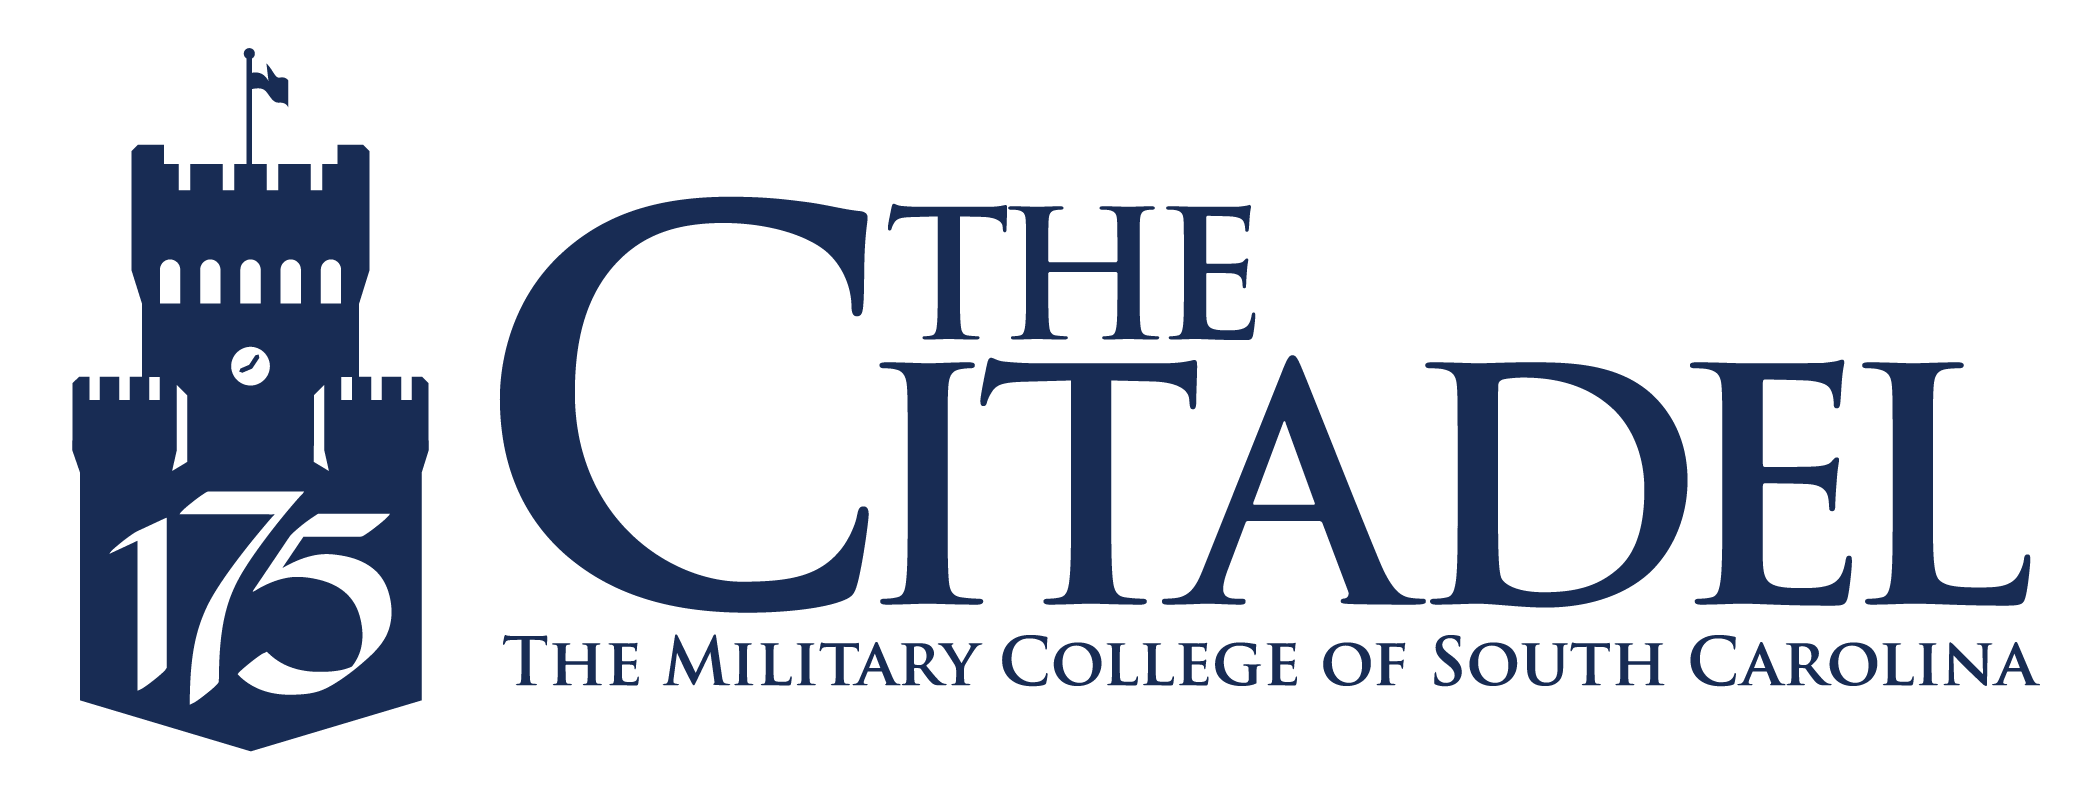 Citadel Logo - 175th Anniversary - The Citadel - Charleston, SC